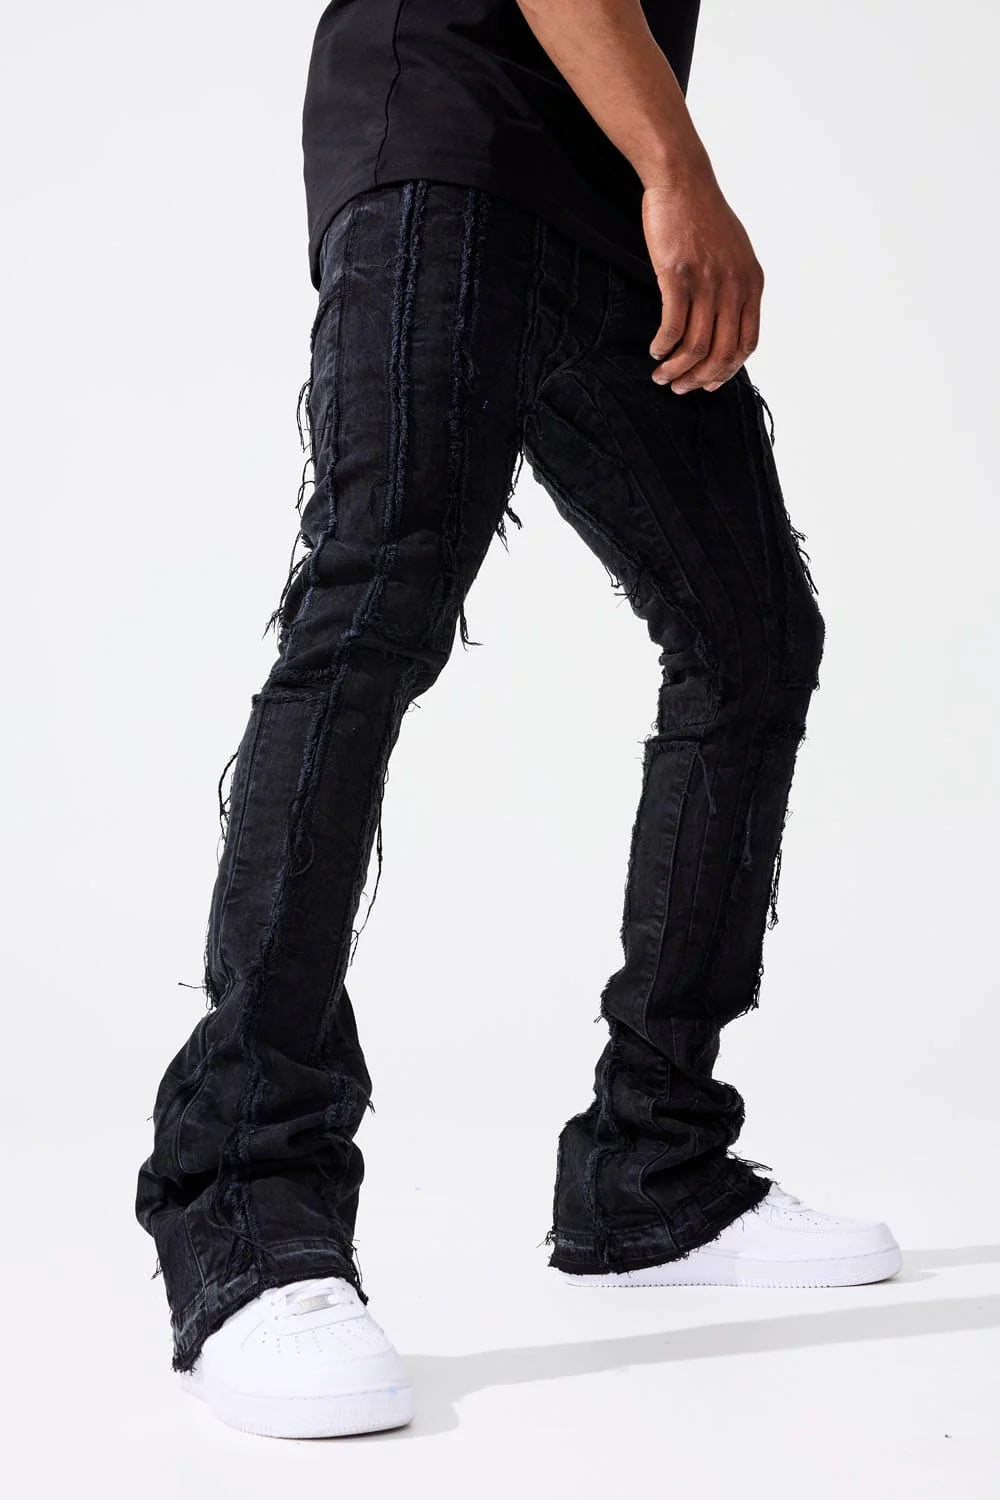 Ross Stacked - Brazen Denim Jeans - Jet Black